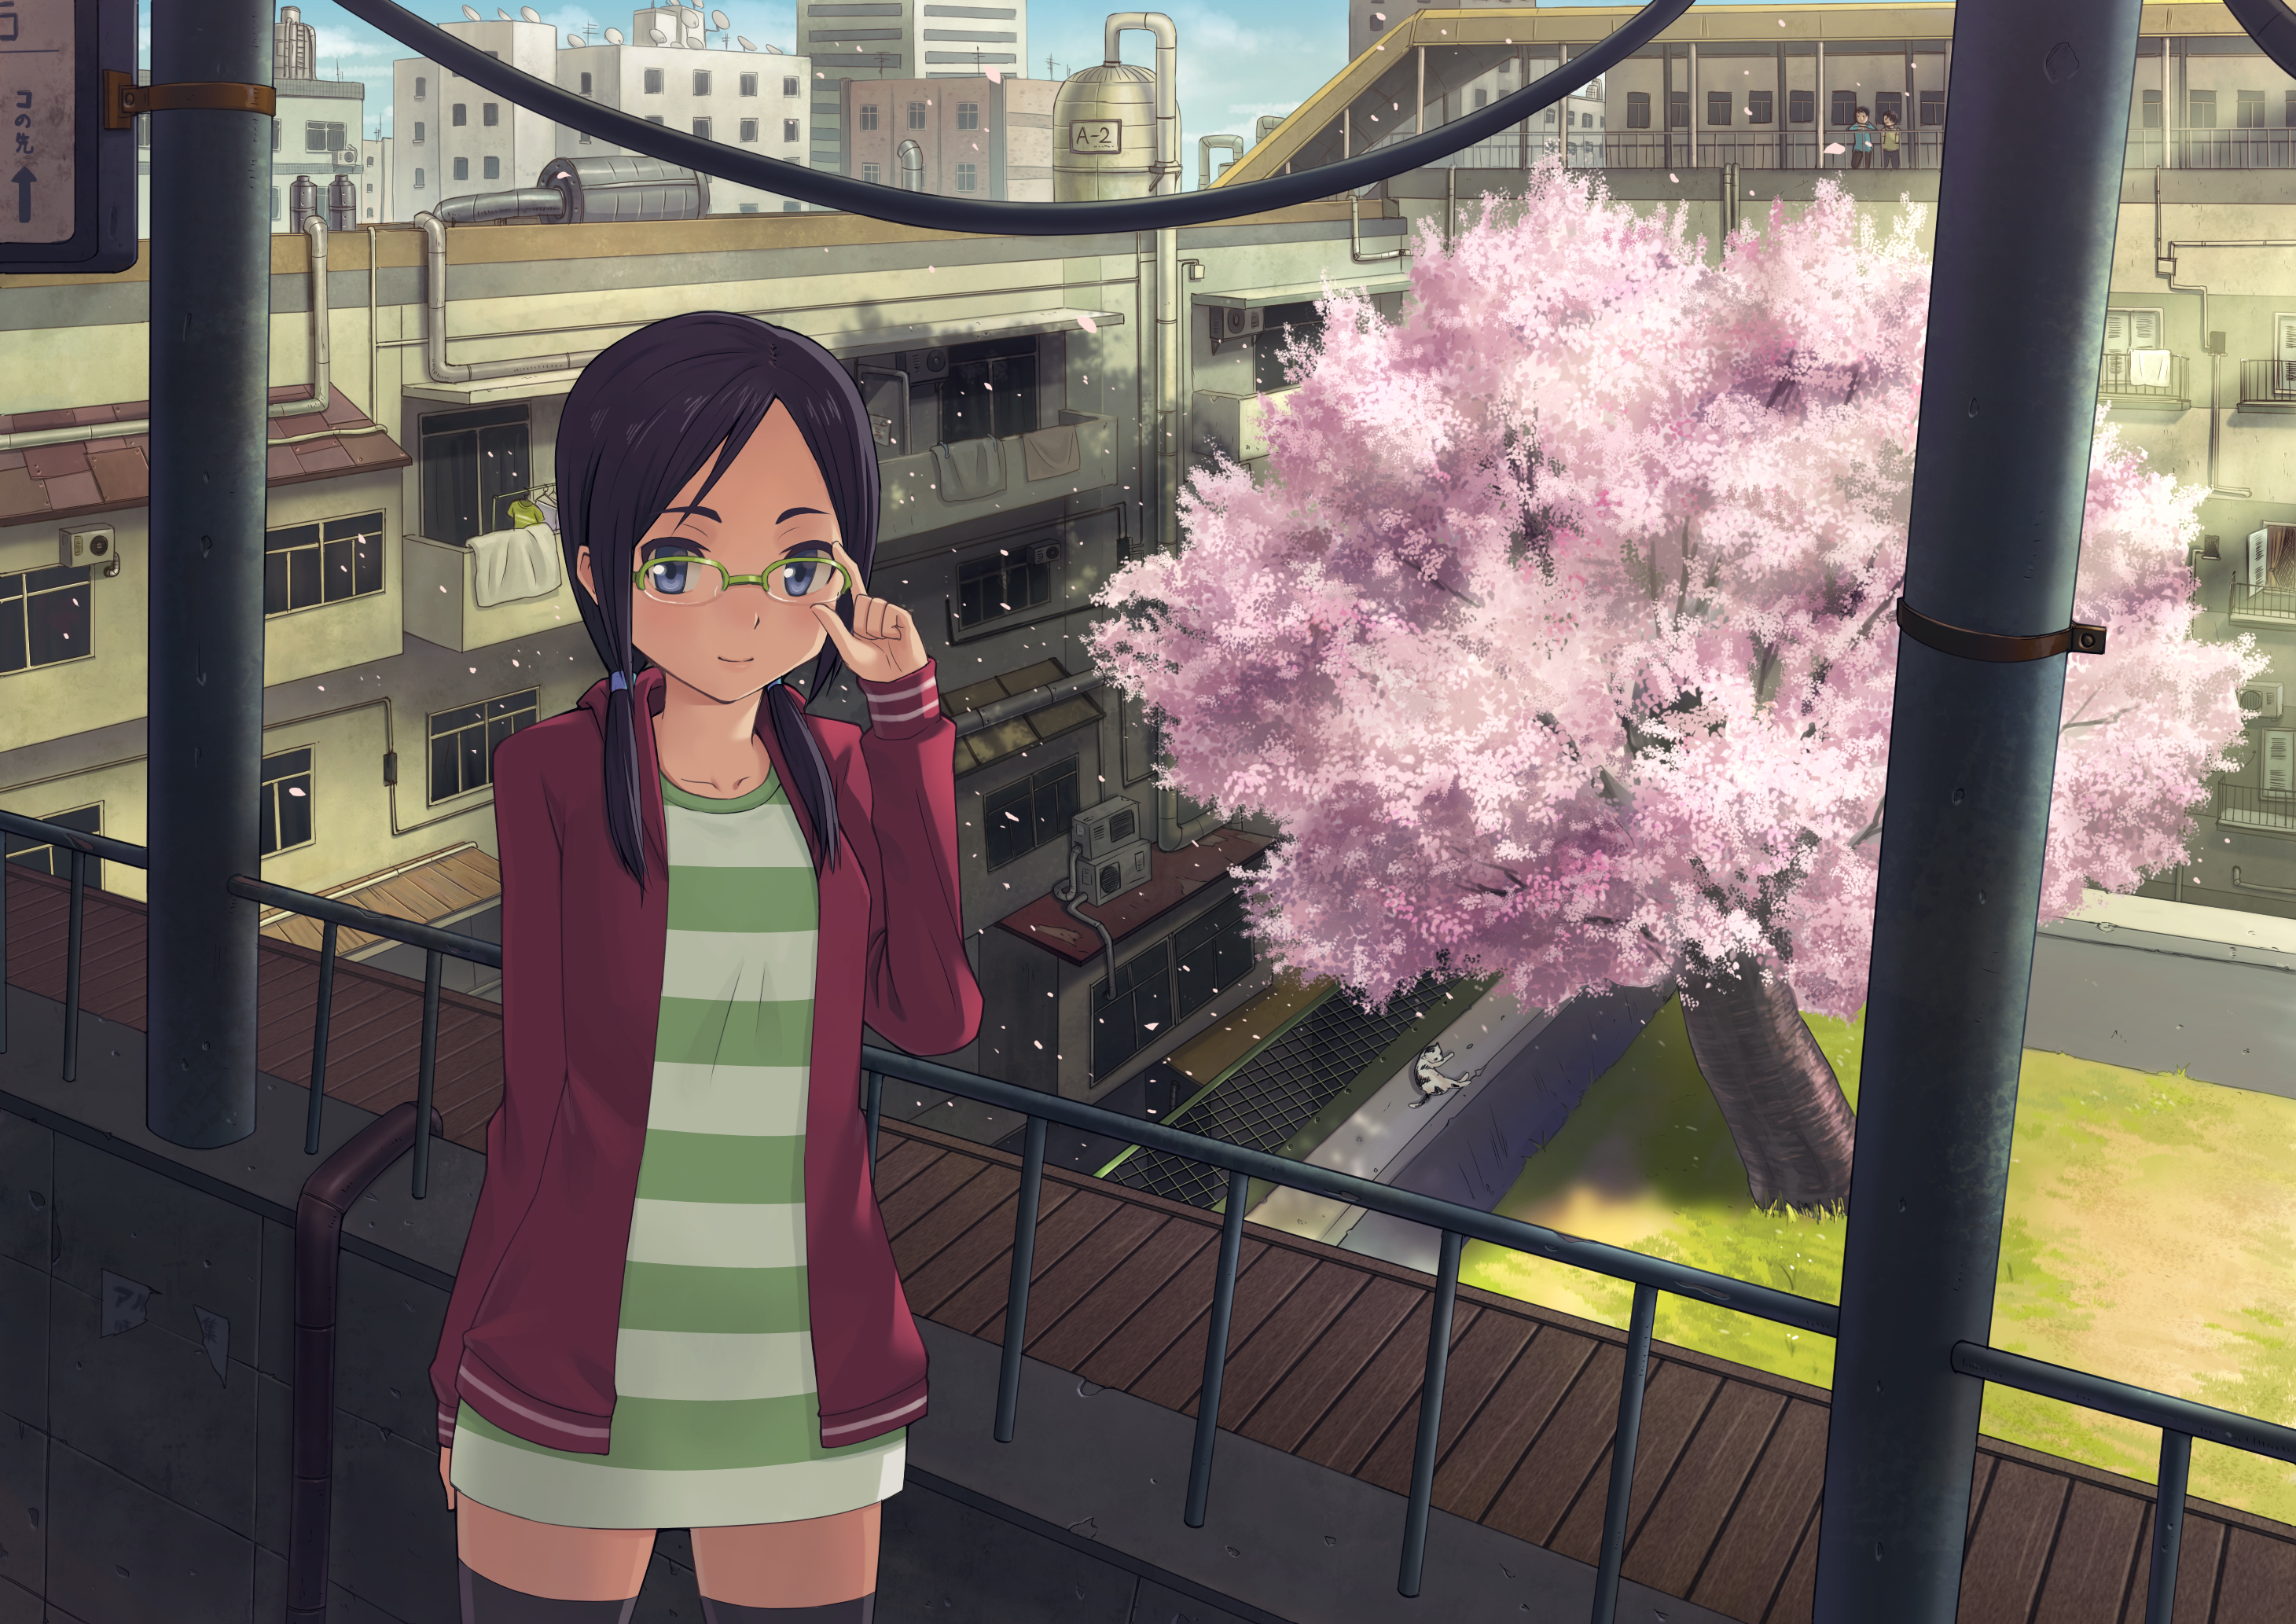 Anime girl with desktop wallpaper background.